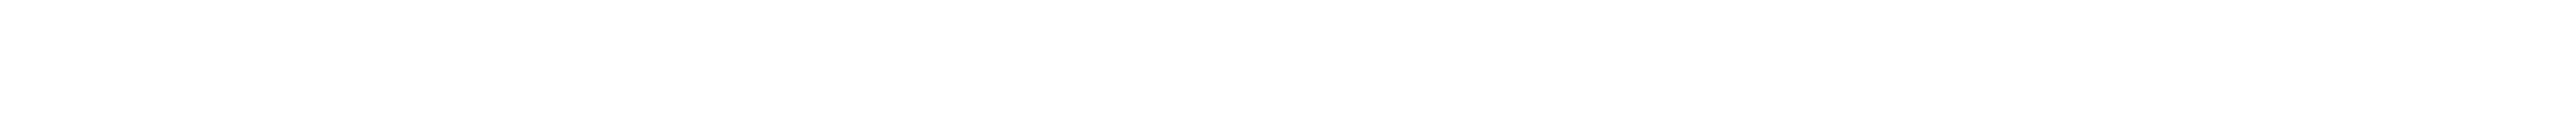 Summer Academies in the Arts logo